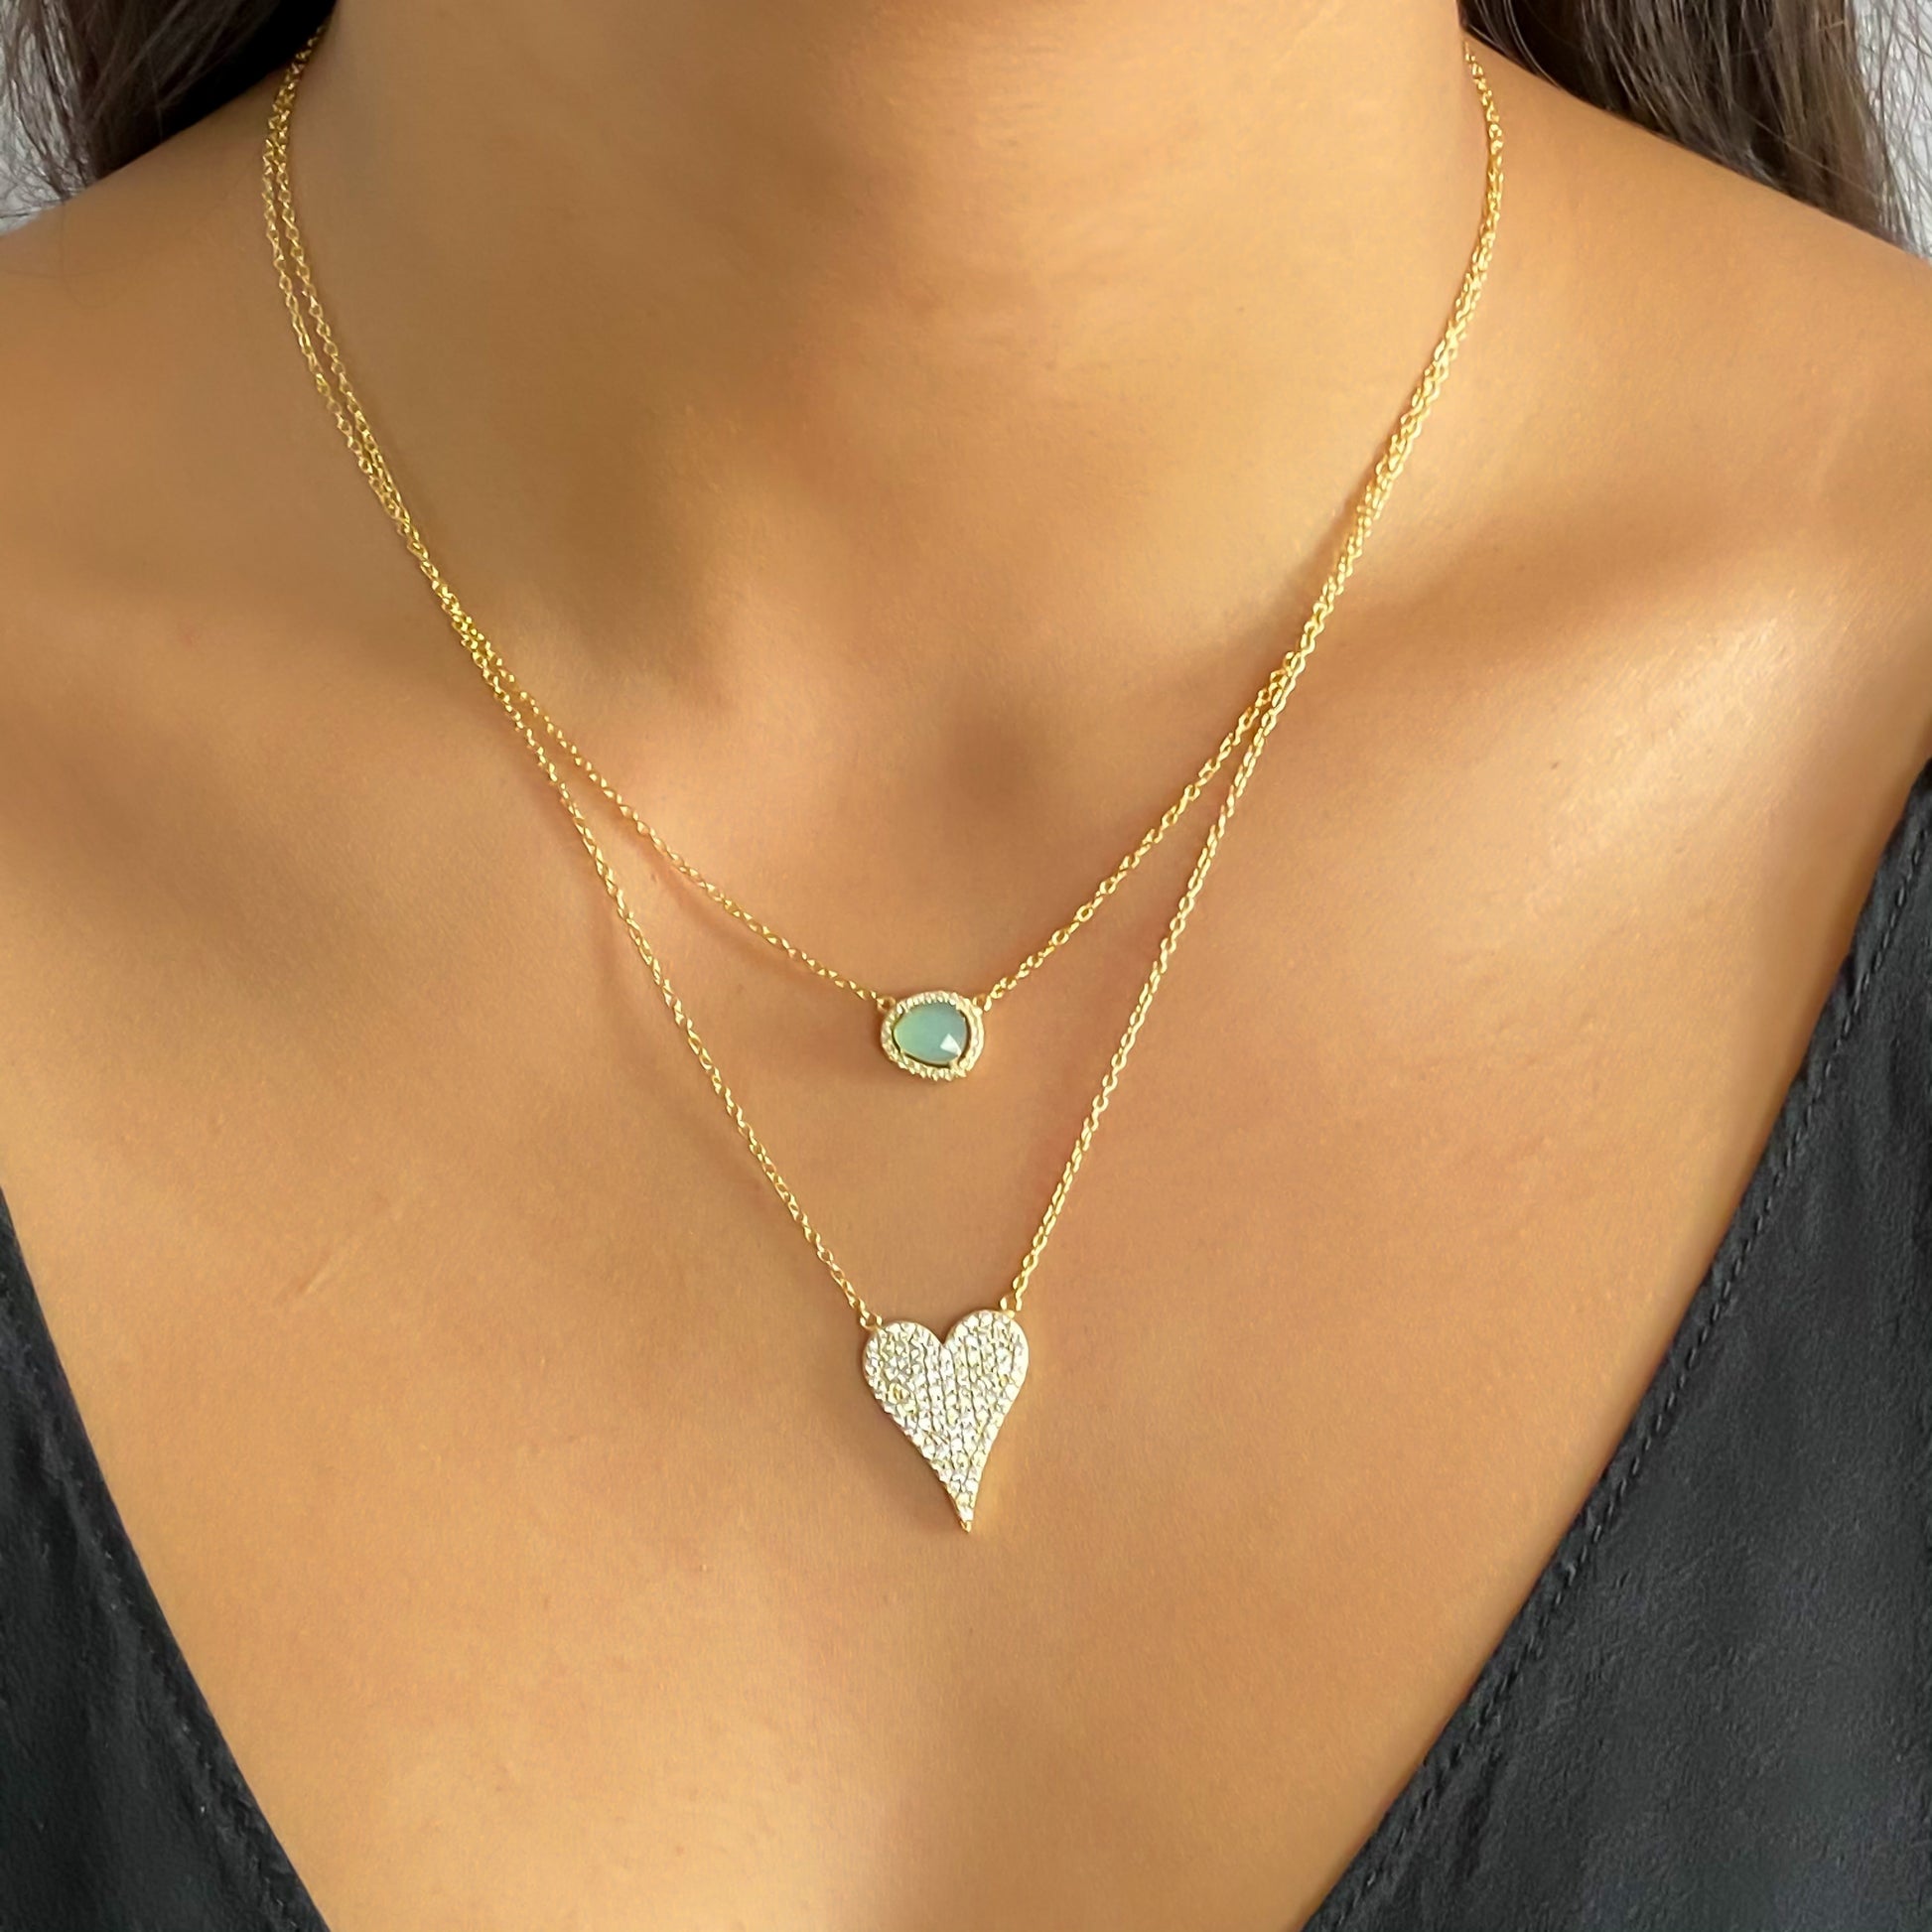 Wearing the Aqua Gemstone Necklace from Alexandra Marks Jewelry